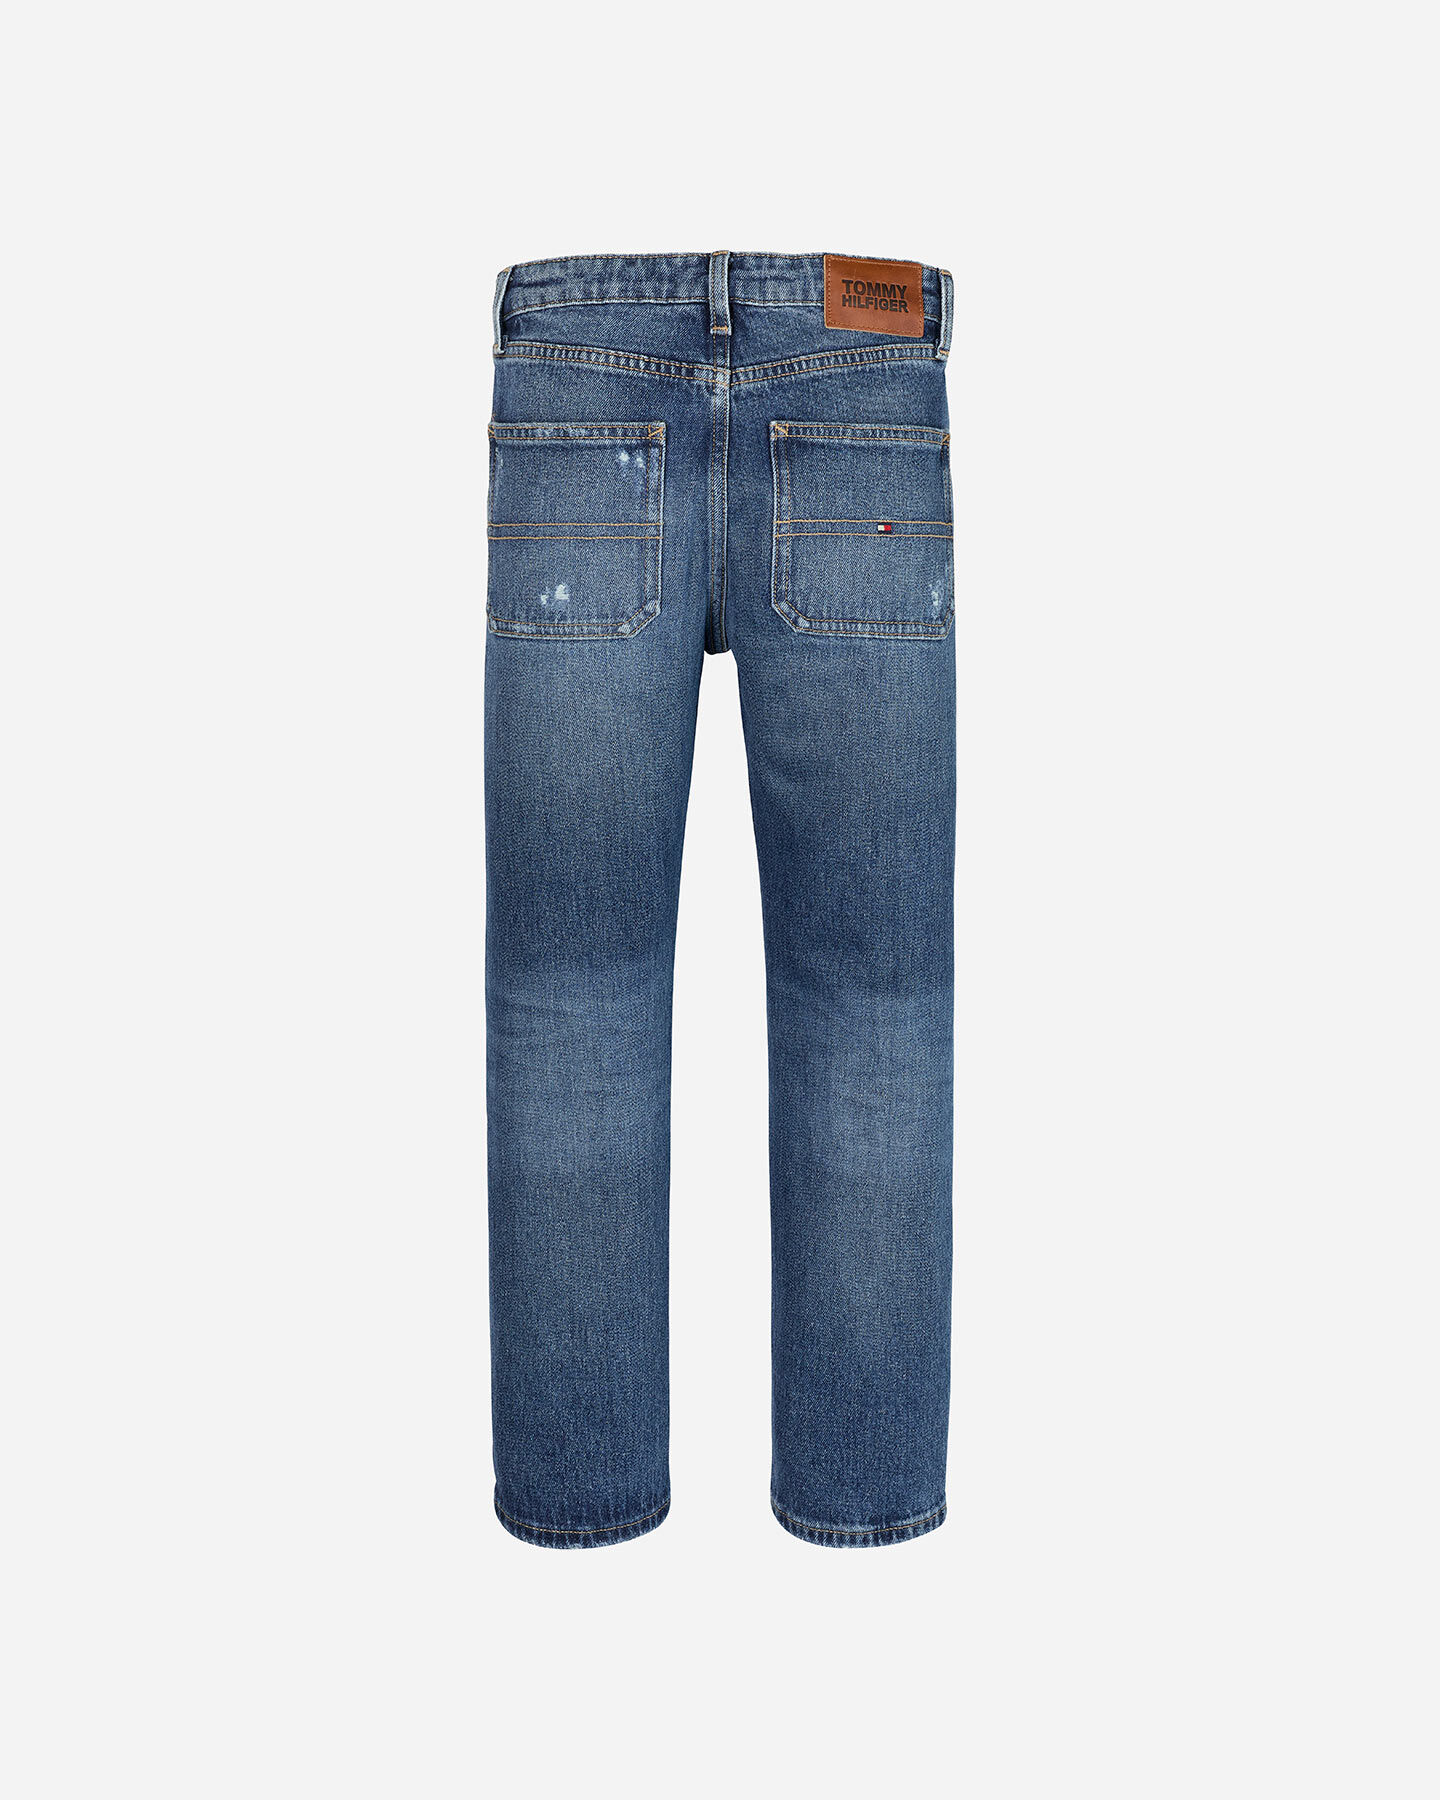  Jeans TOMMY HILFIGER SKATER ROTTUREID JR S4126707|1A5|10A scatto 1